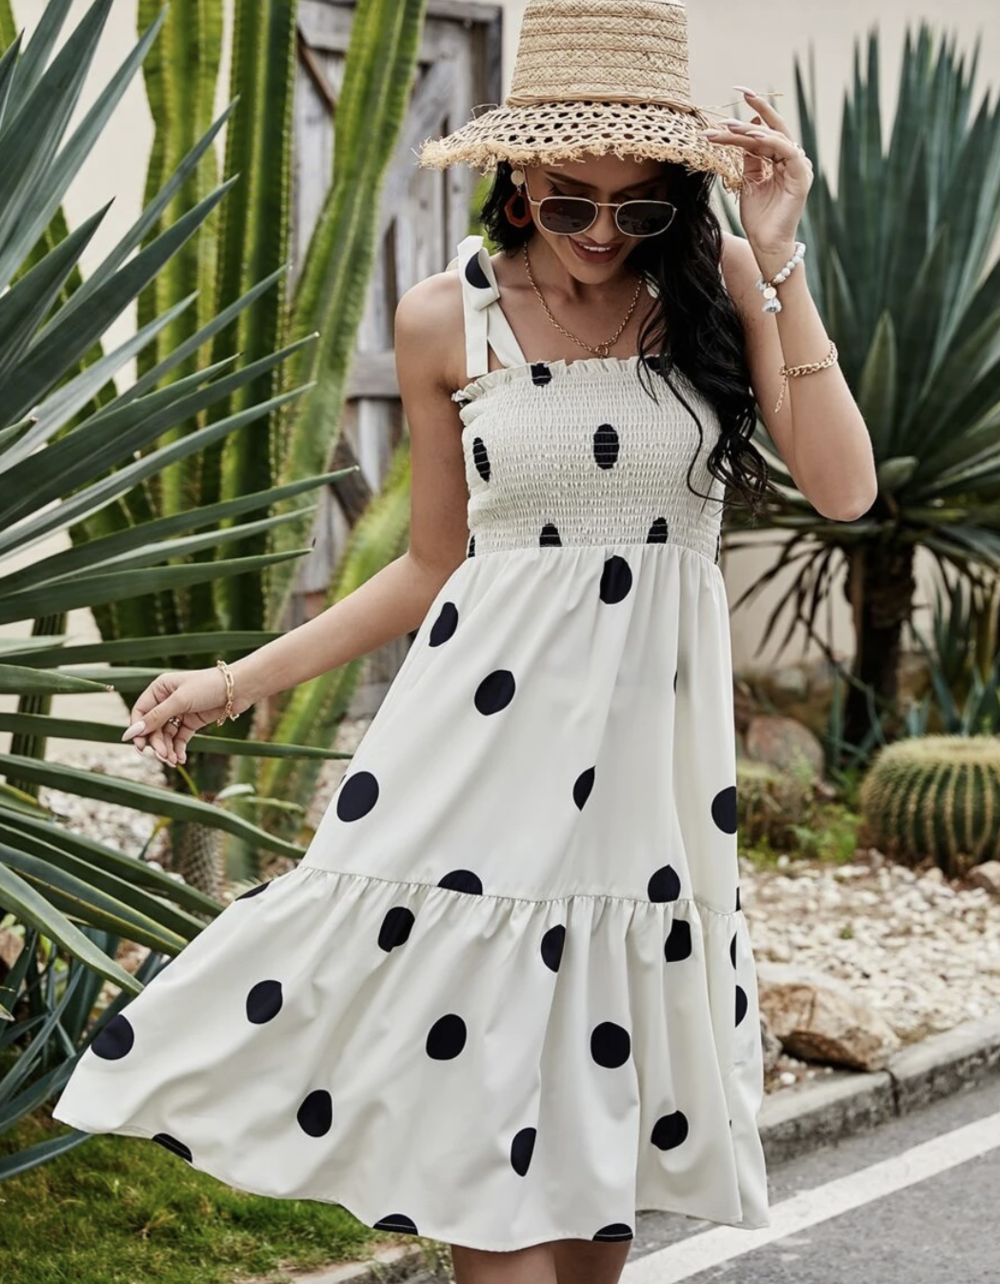 white polka dot dress for outfits for disney park